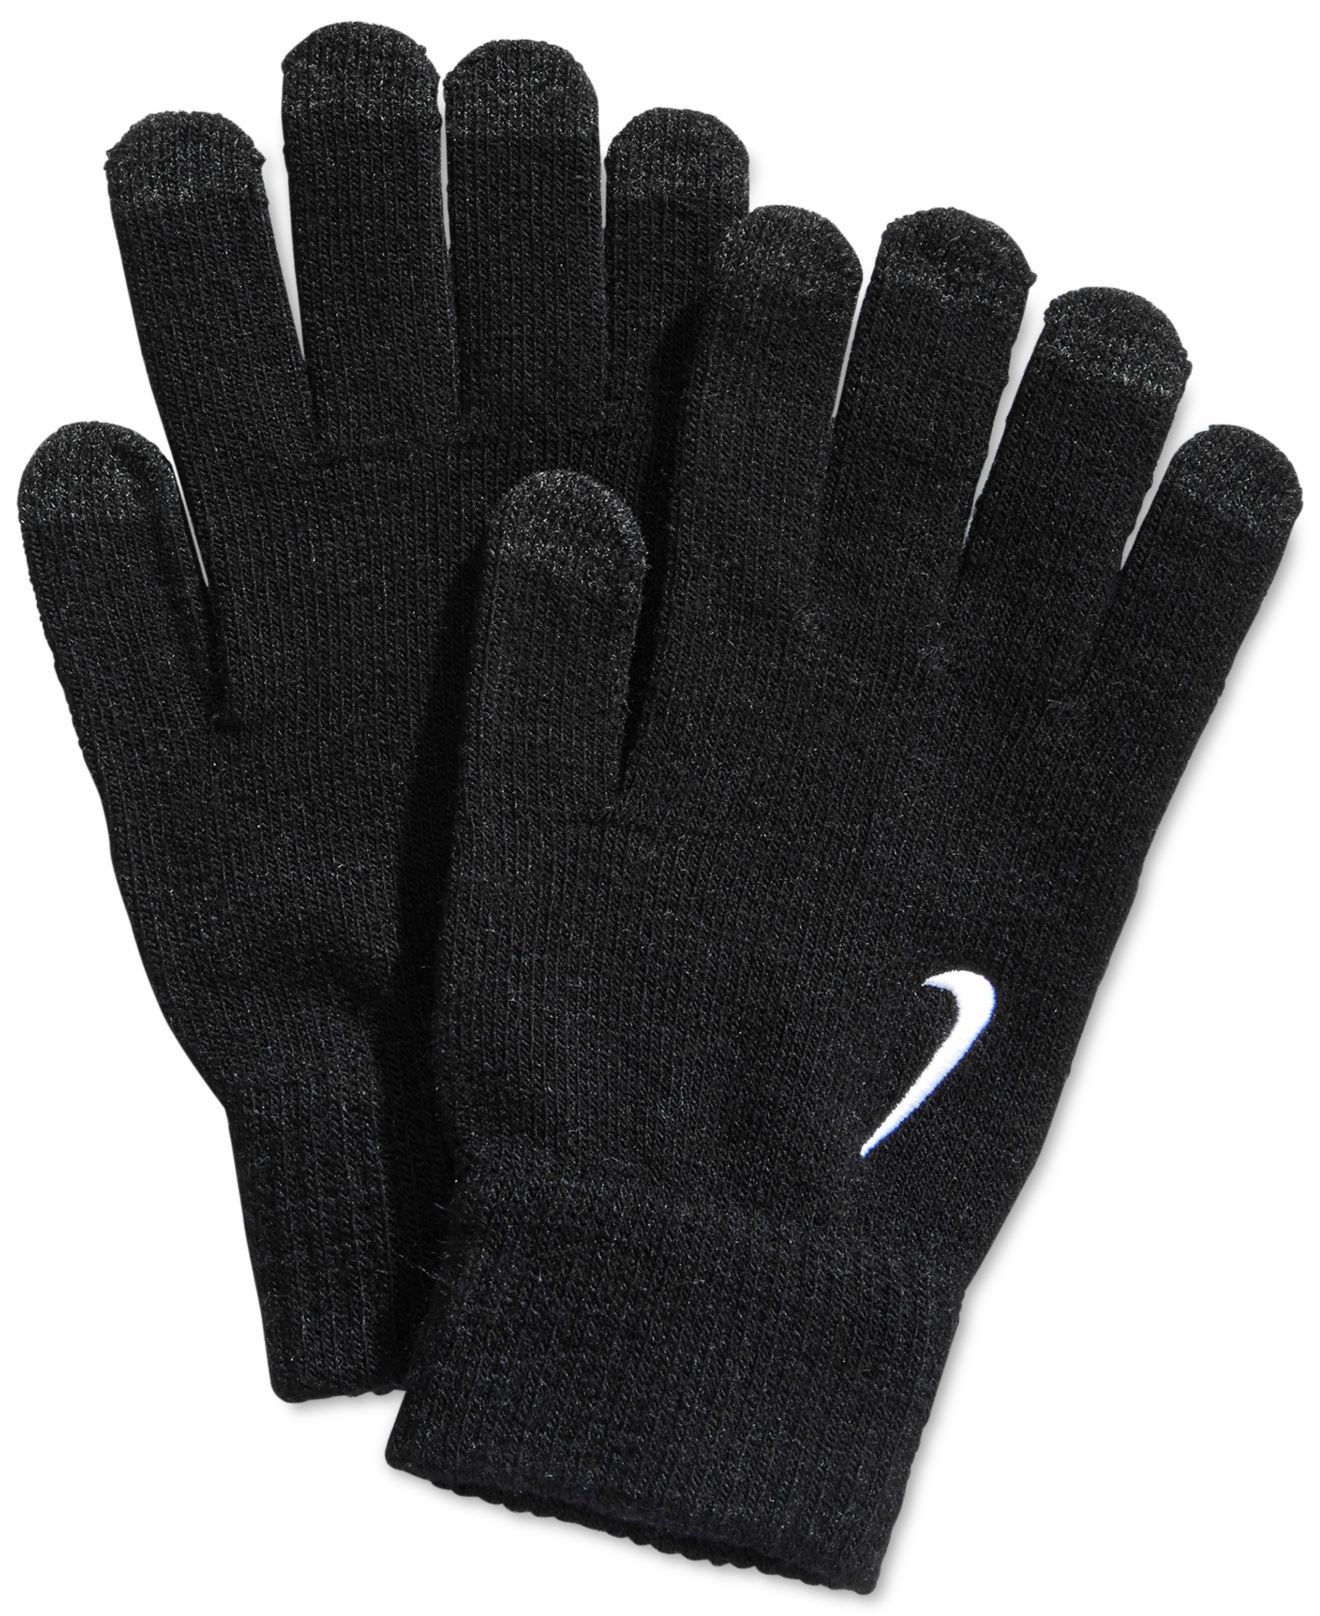 nike men's knit tech touch gloves